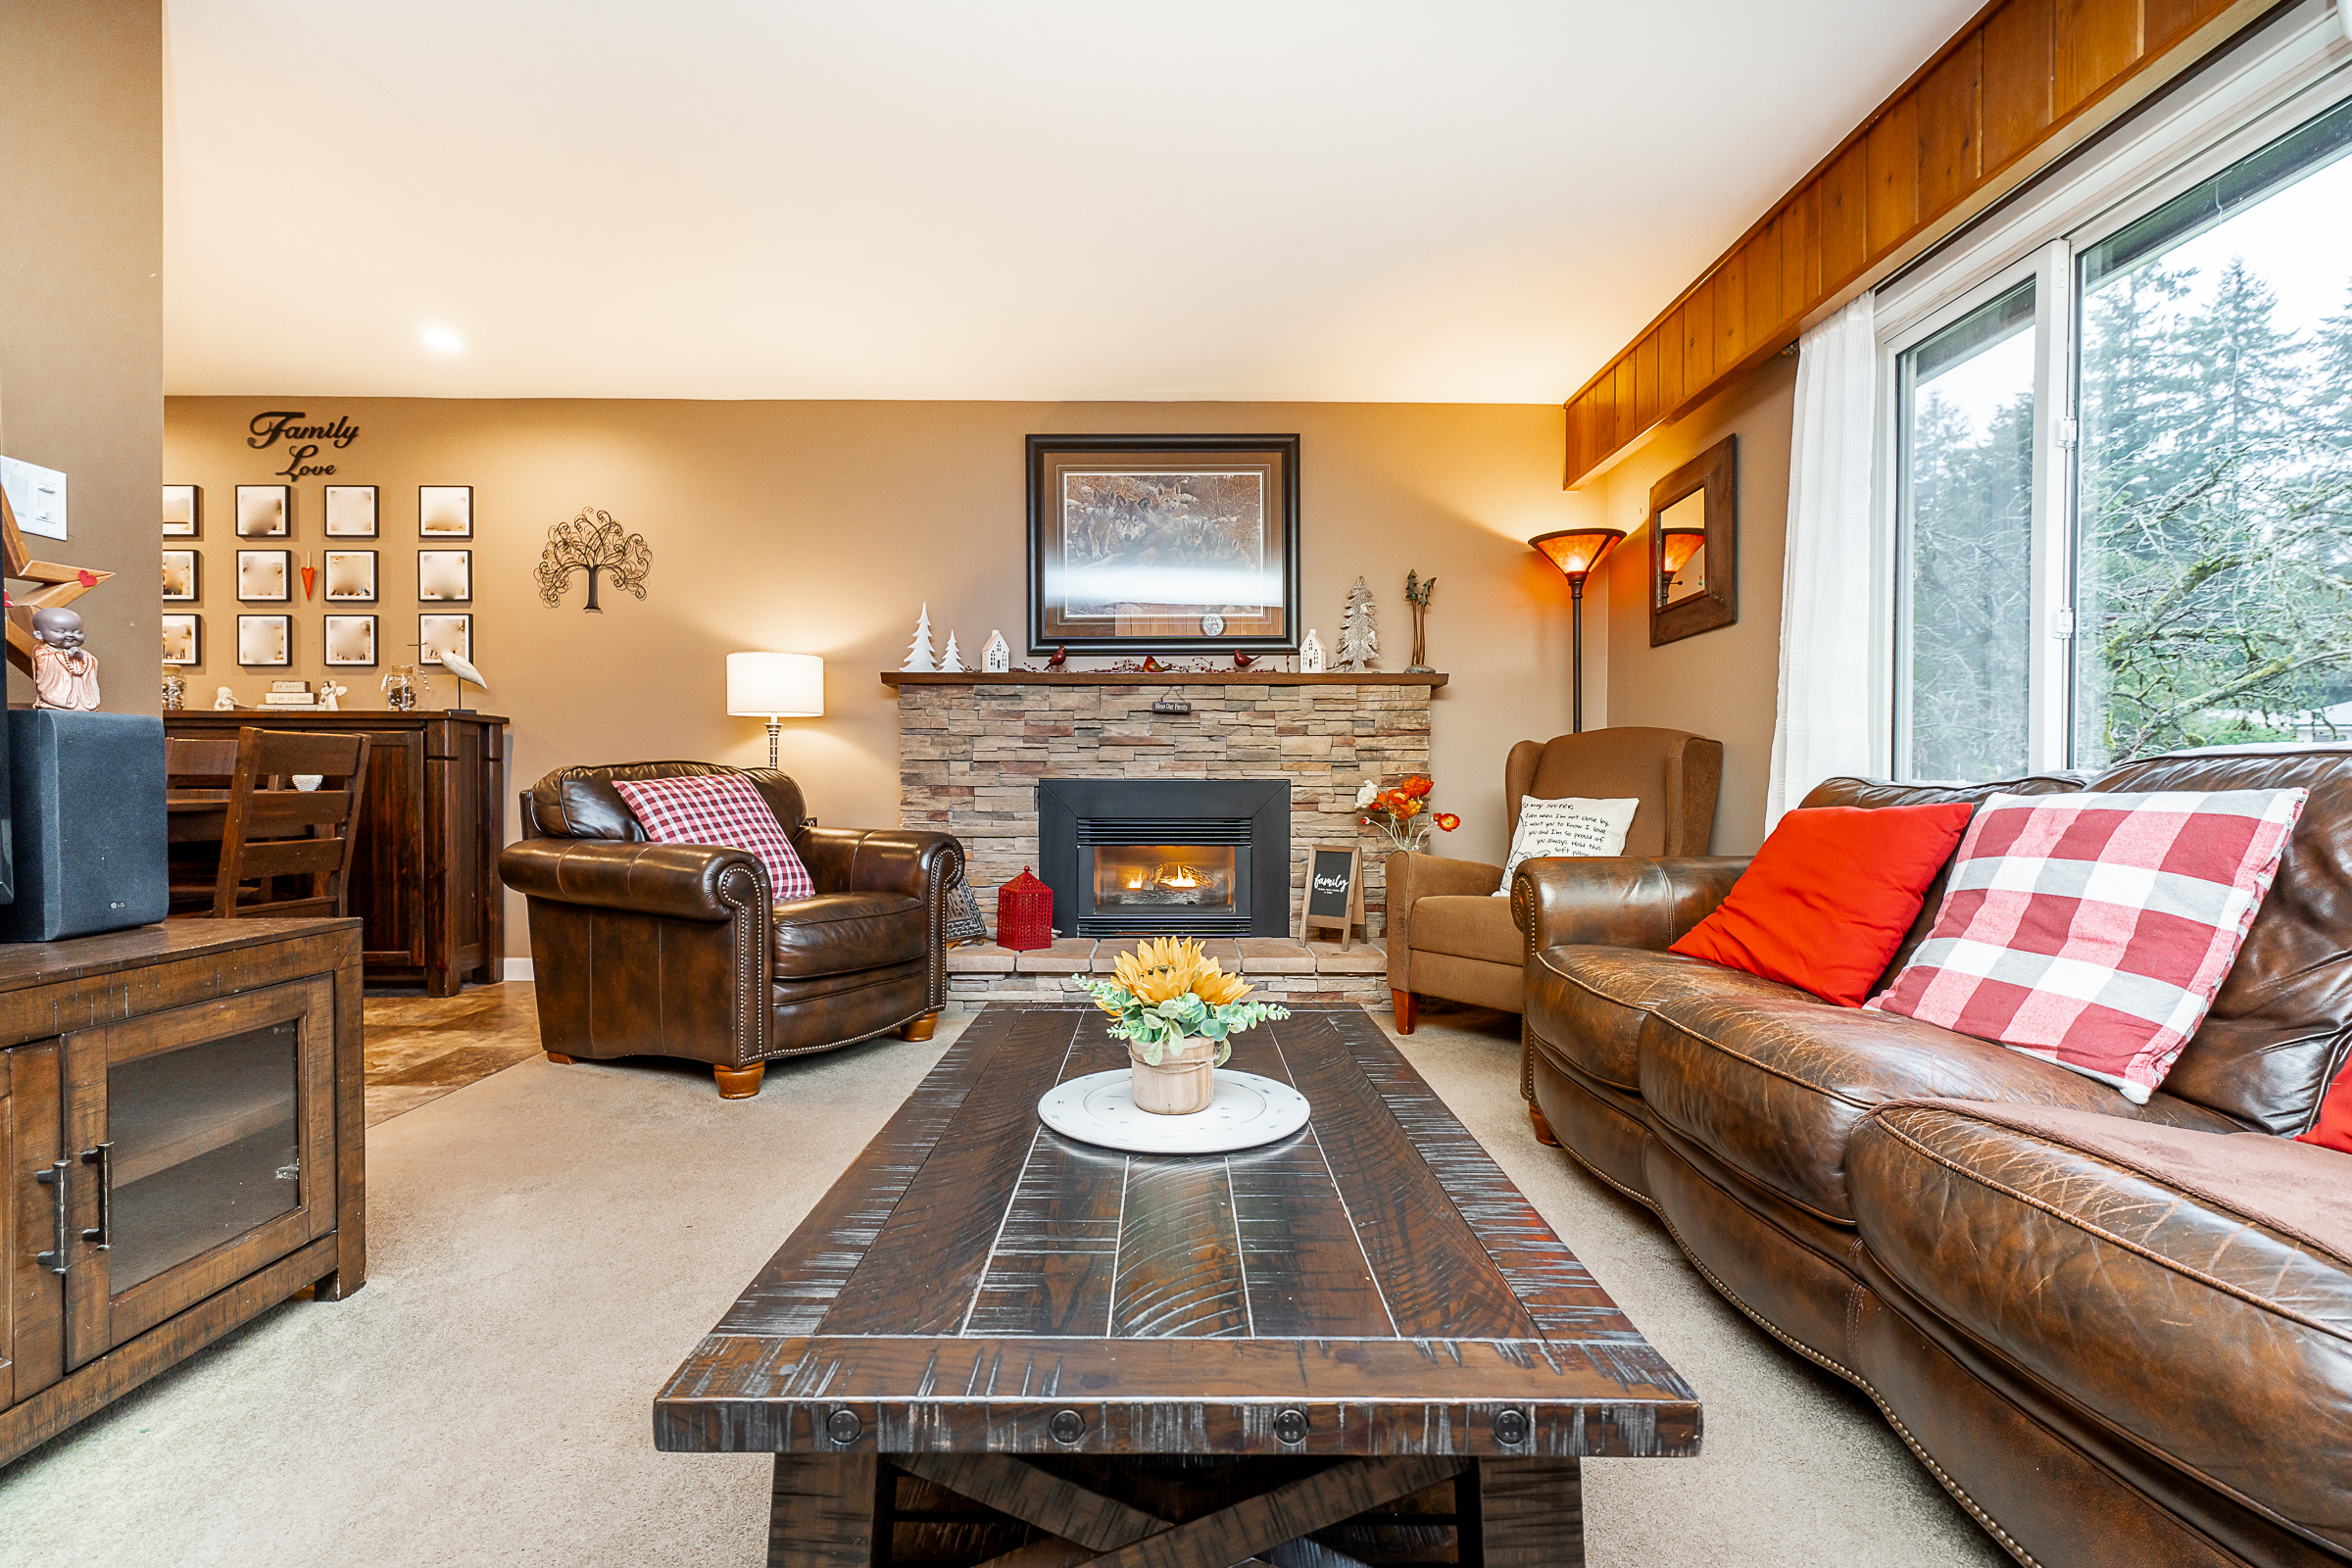 Selling a House in Coquitlam 2260 Portage Avenue Coquitlam #1 Best Coquitlam Realtor Krista Lapp